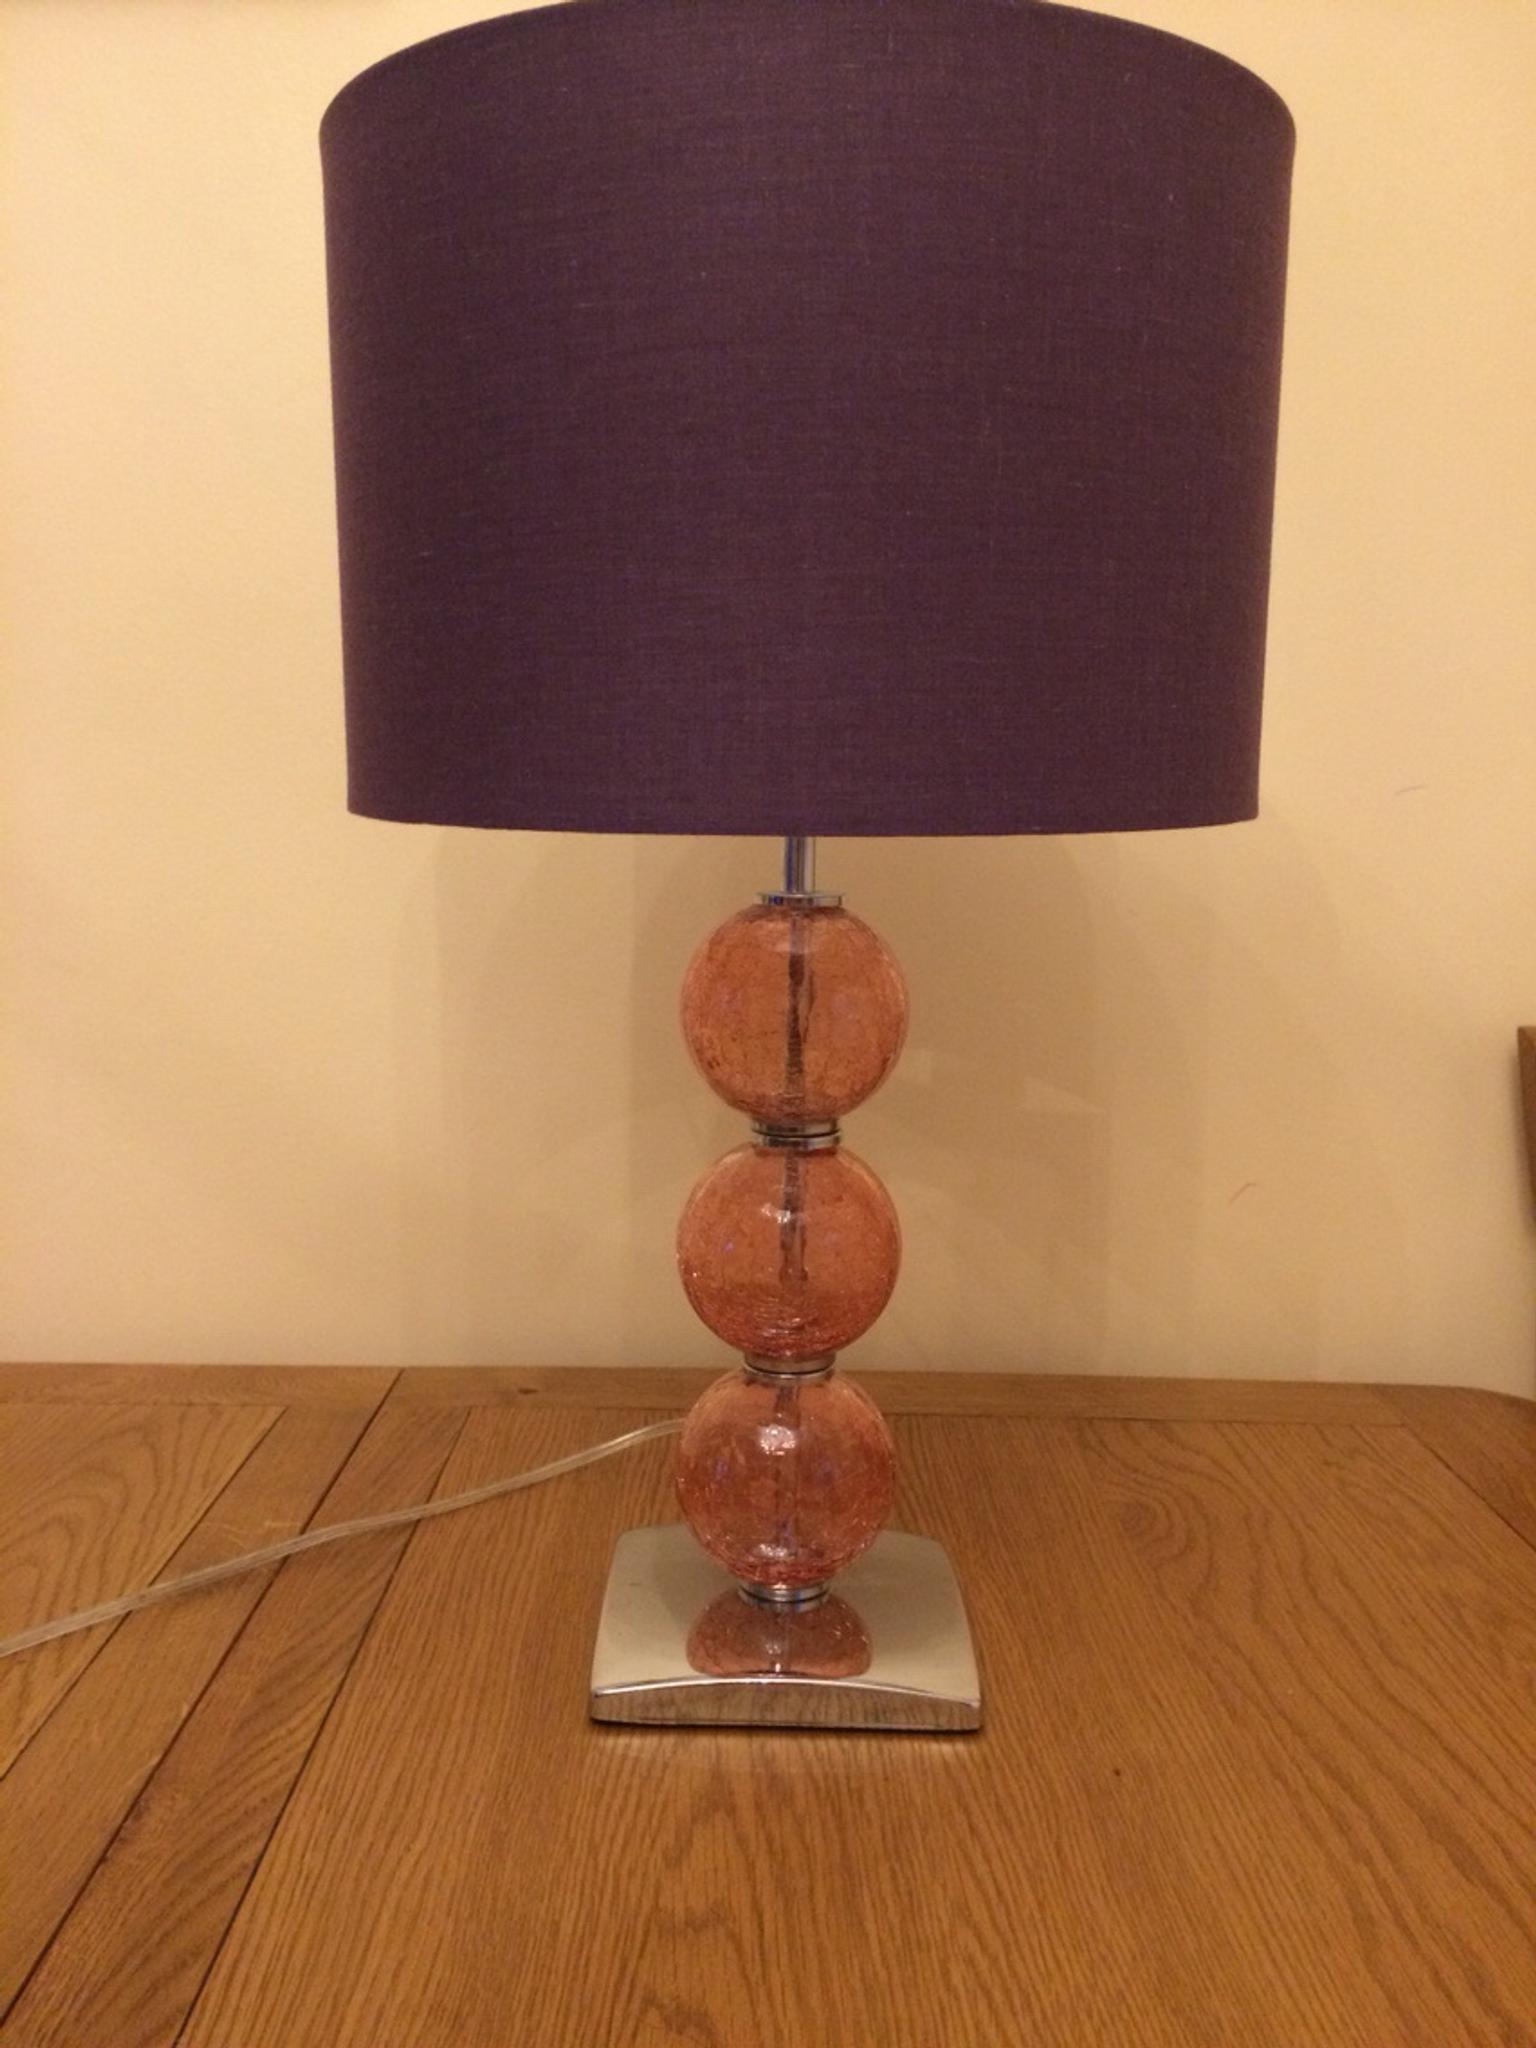 Large M S Table Lamp In Cv6 Coventry Fur 10 00 Zum Verkauf